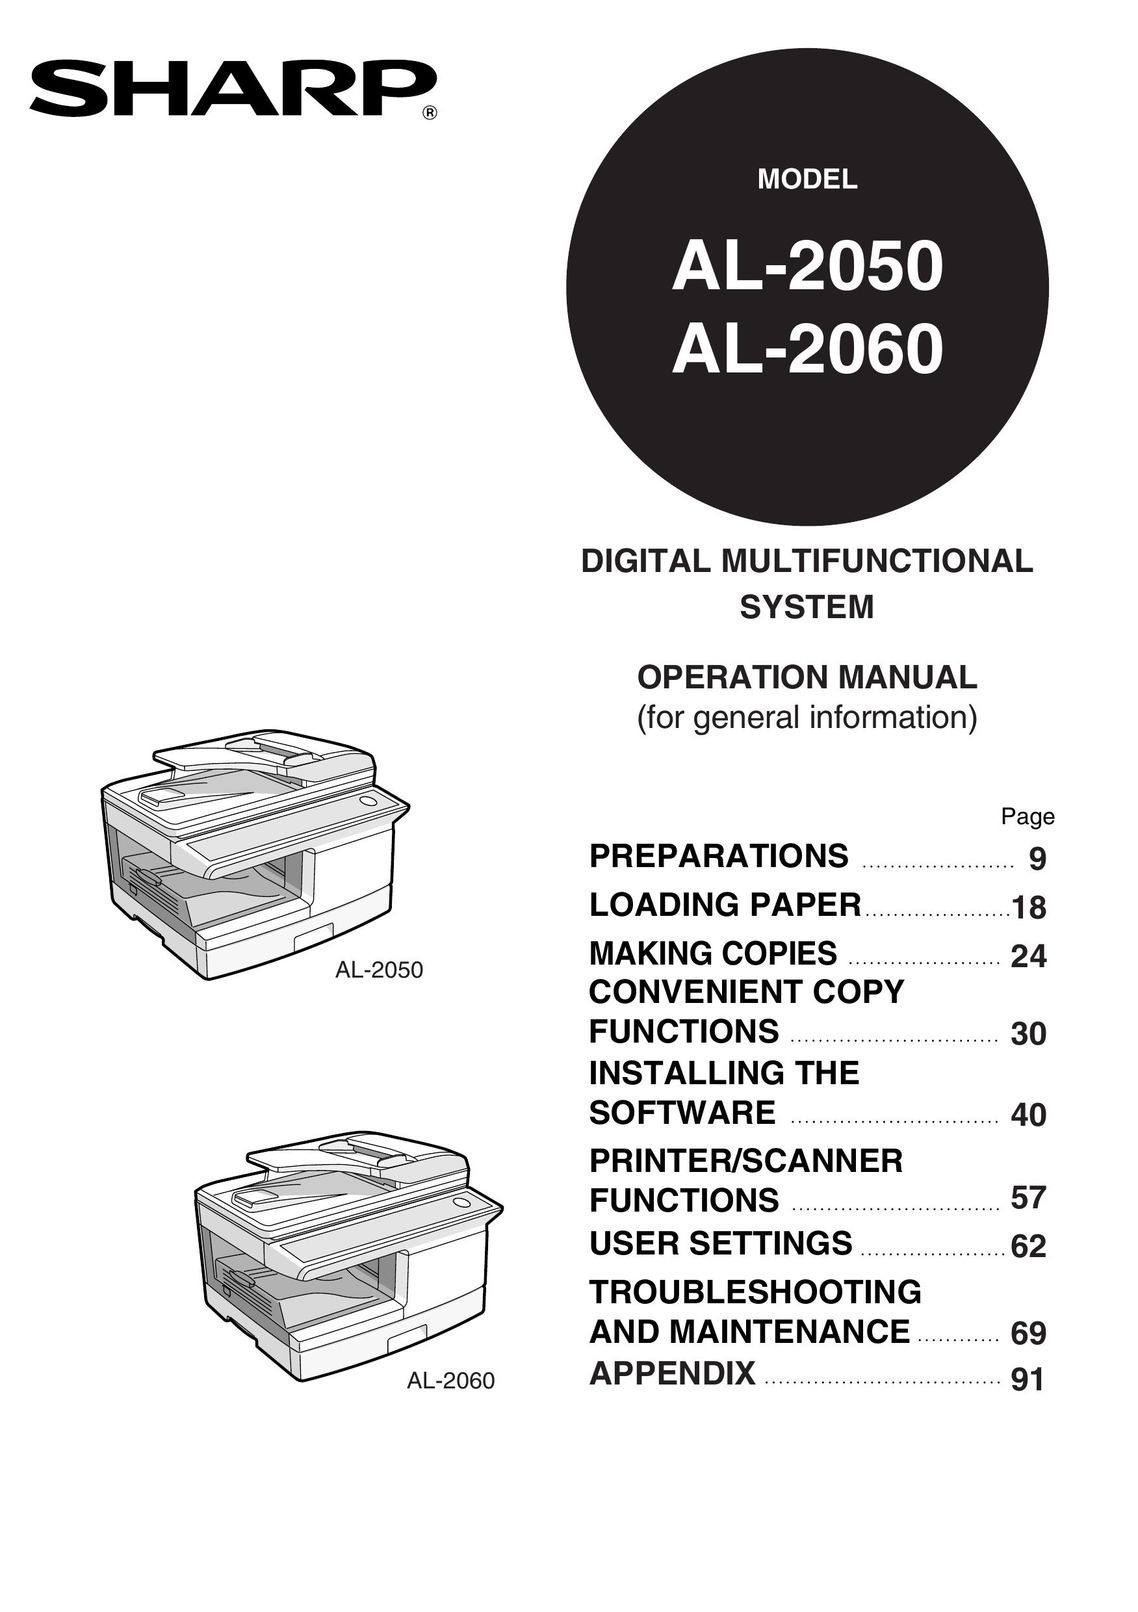 Sharp AL-2060 All in One Printer User Manual